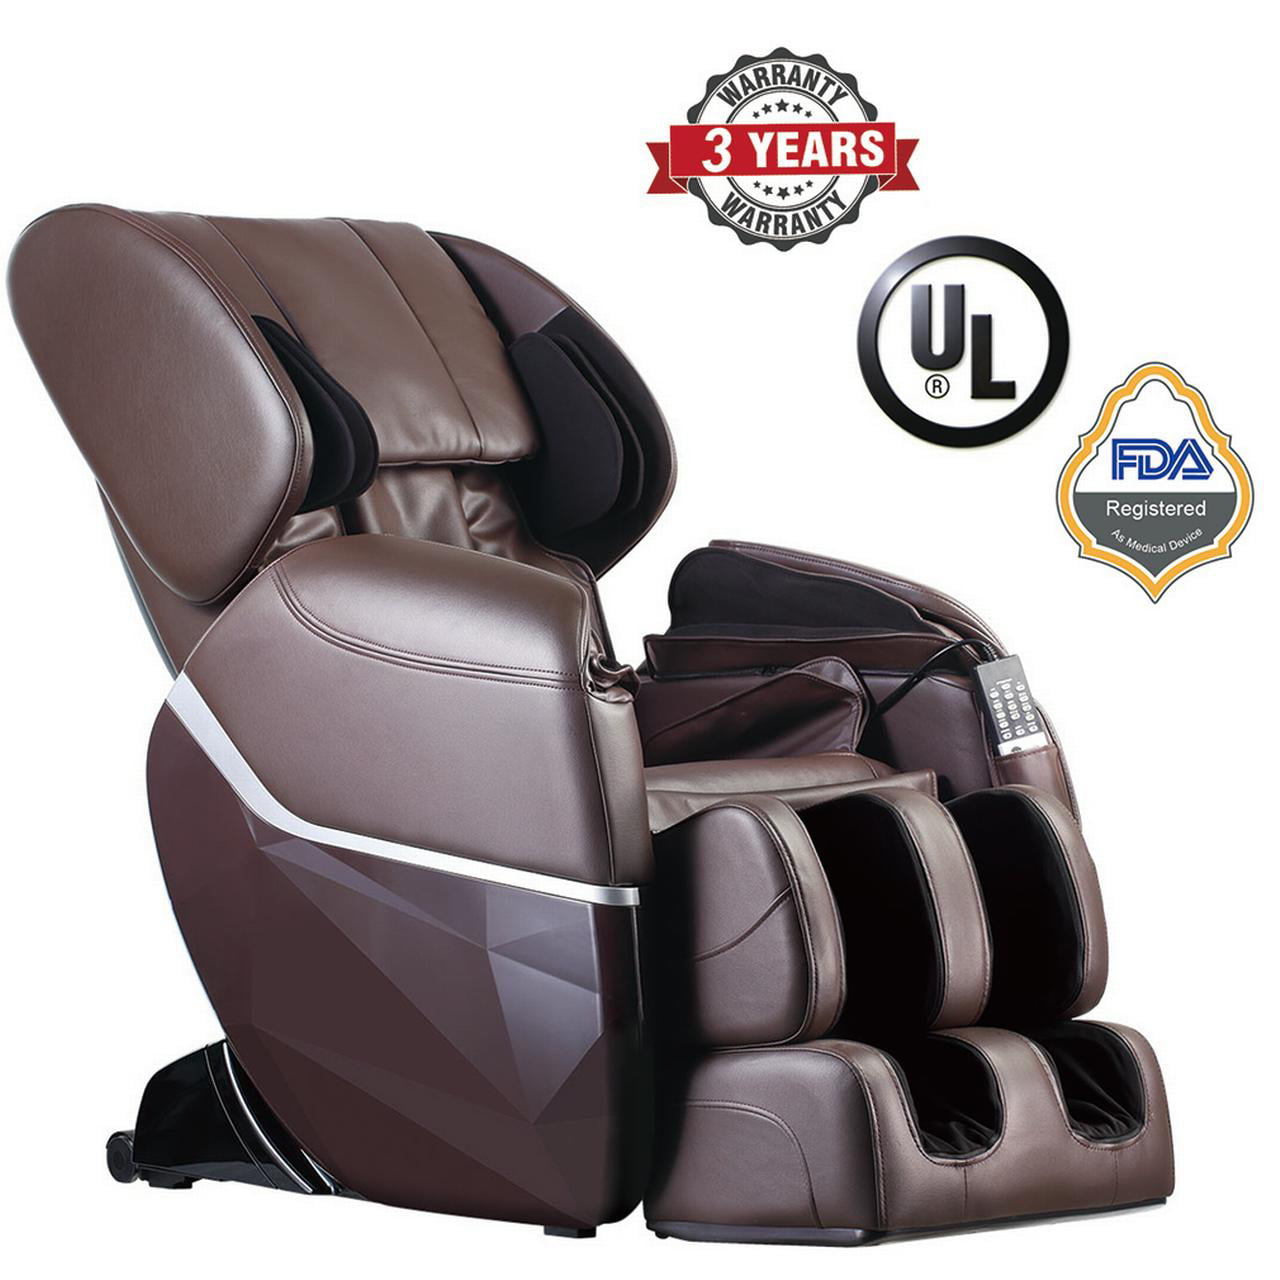 Bestmassage Zero Gravity Shiatsu Massage Chair Full Body Recliner With Built In Heat Therapy Walmart Com Walmart Com